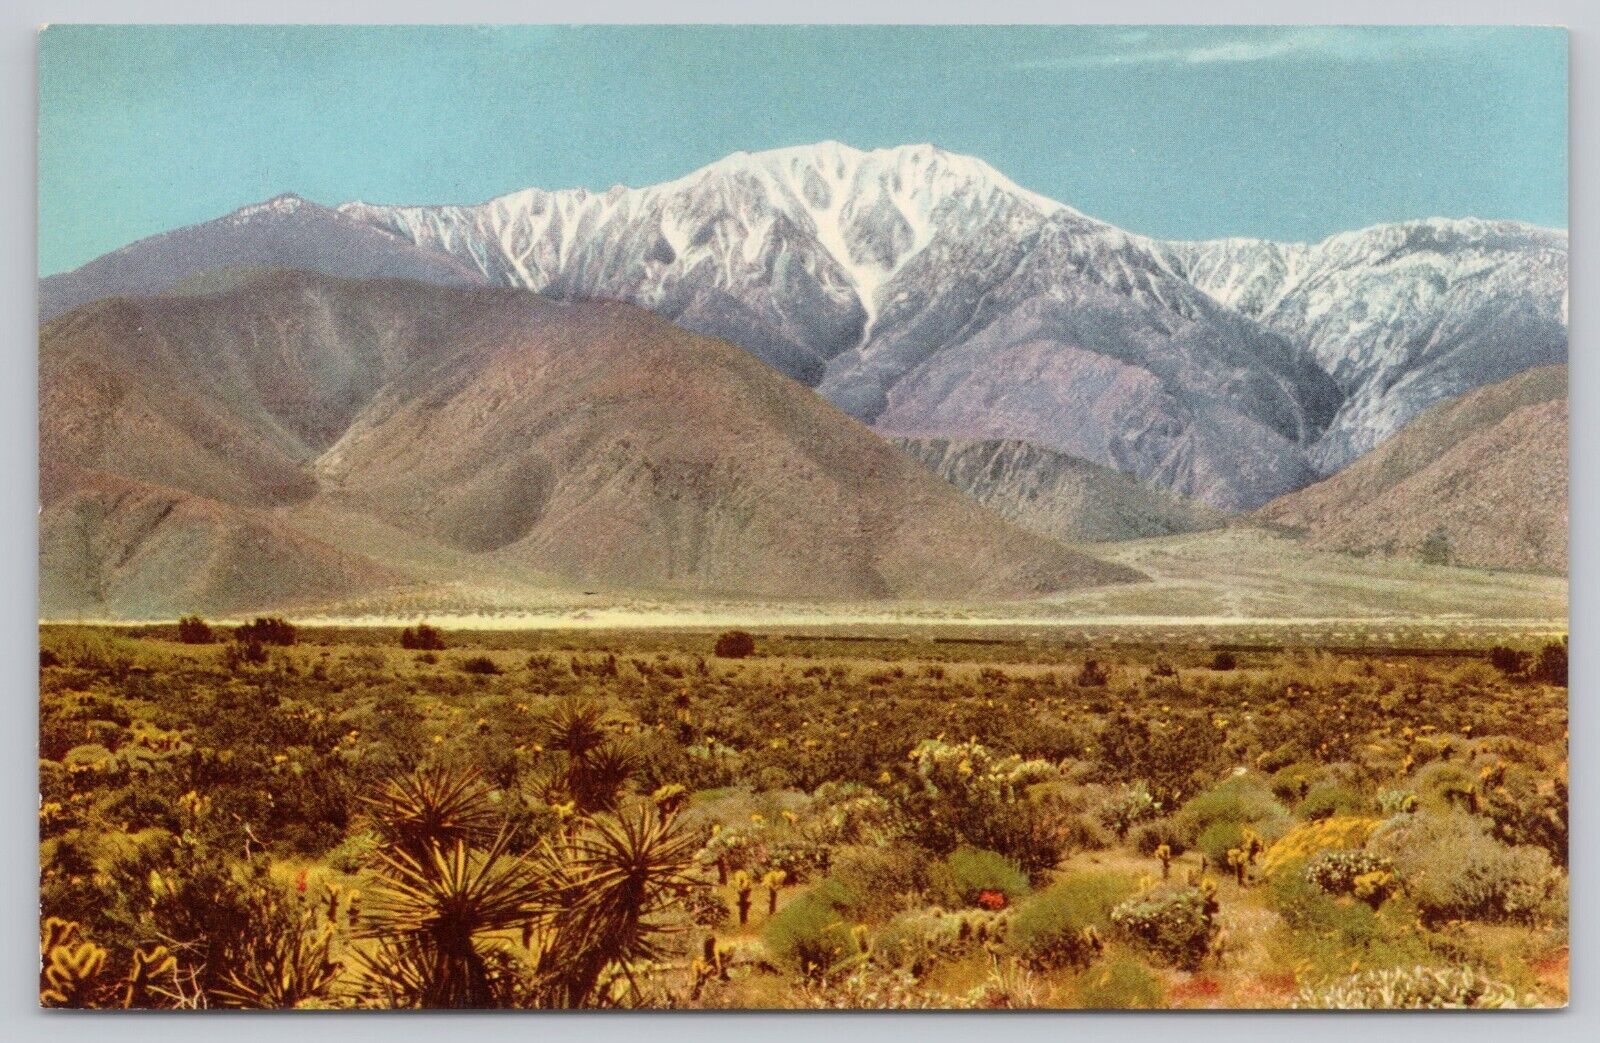 Palm Springs California, San Jacinto Mountain Scenic View, Vintage Postcard